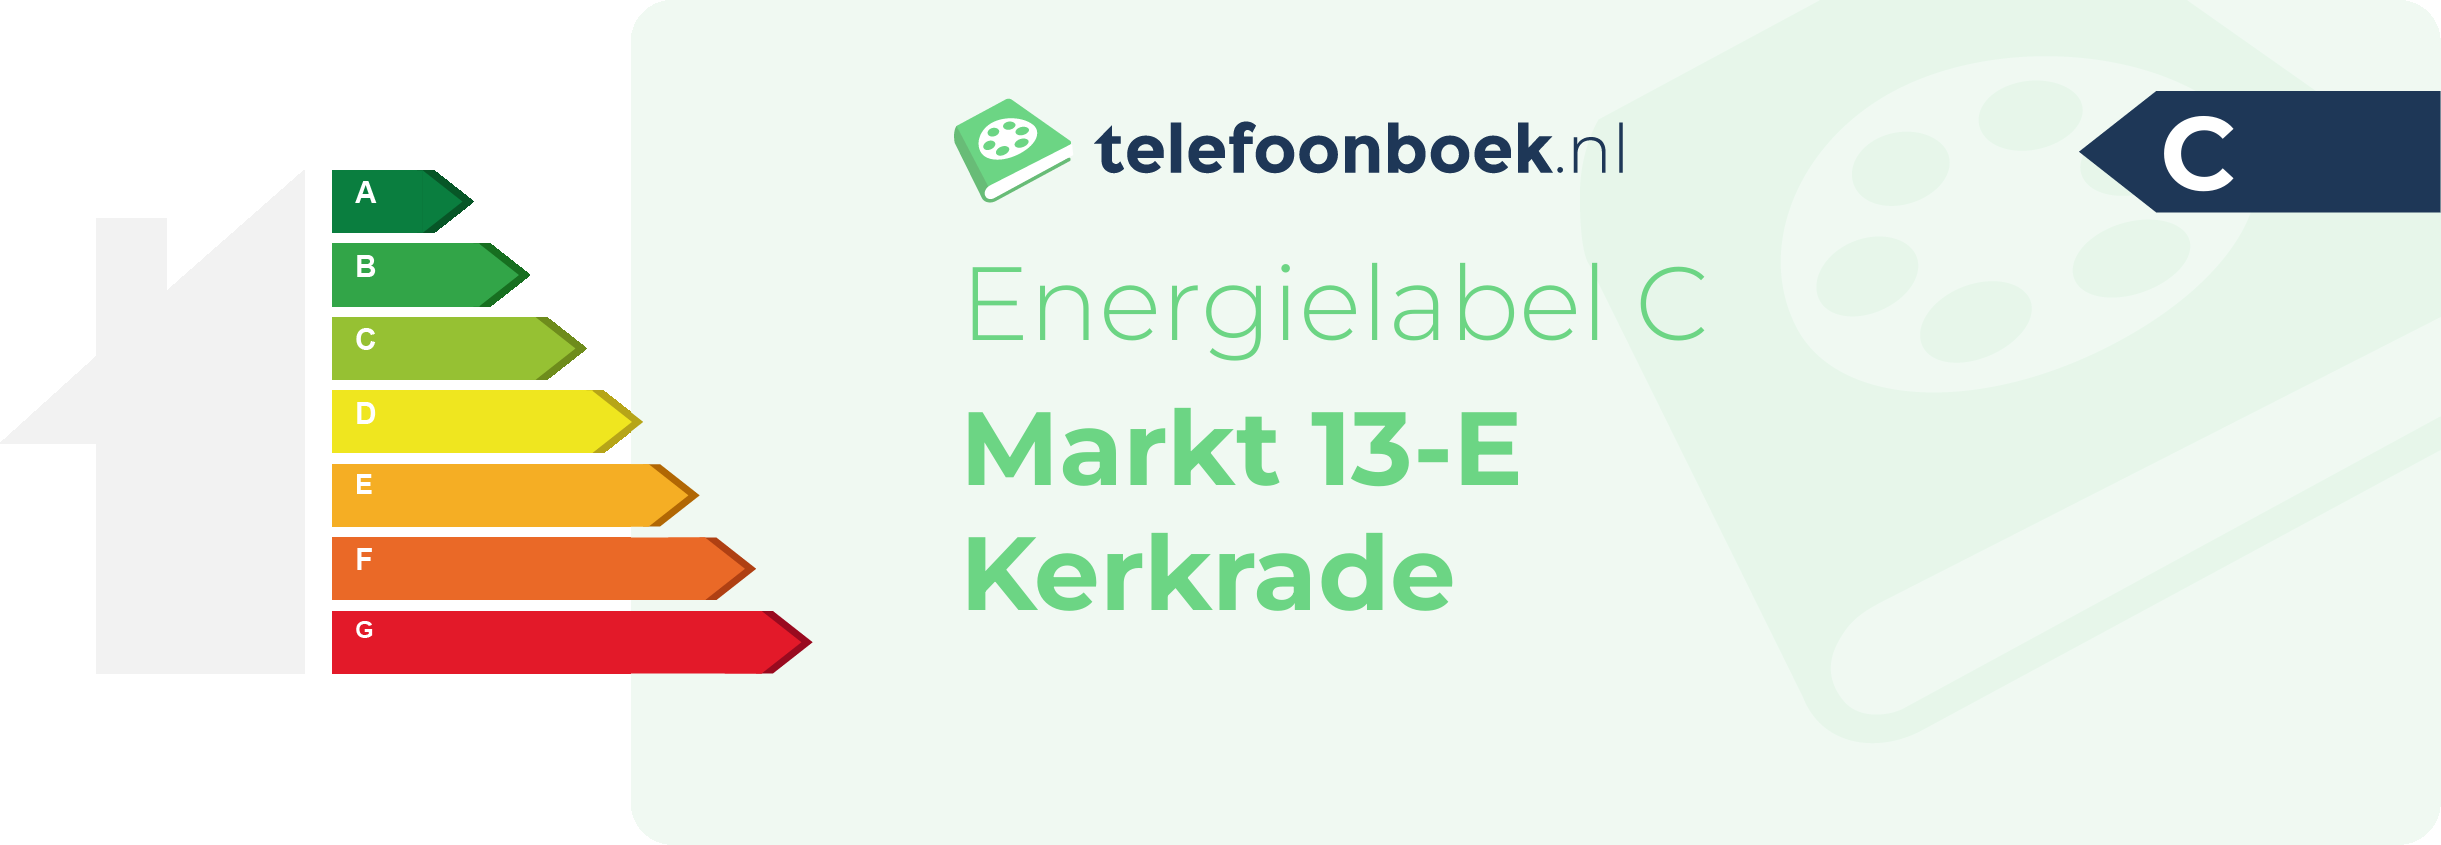 Energielabel Markt 13-E Kerkrade